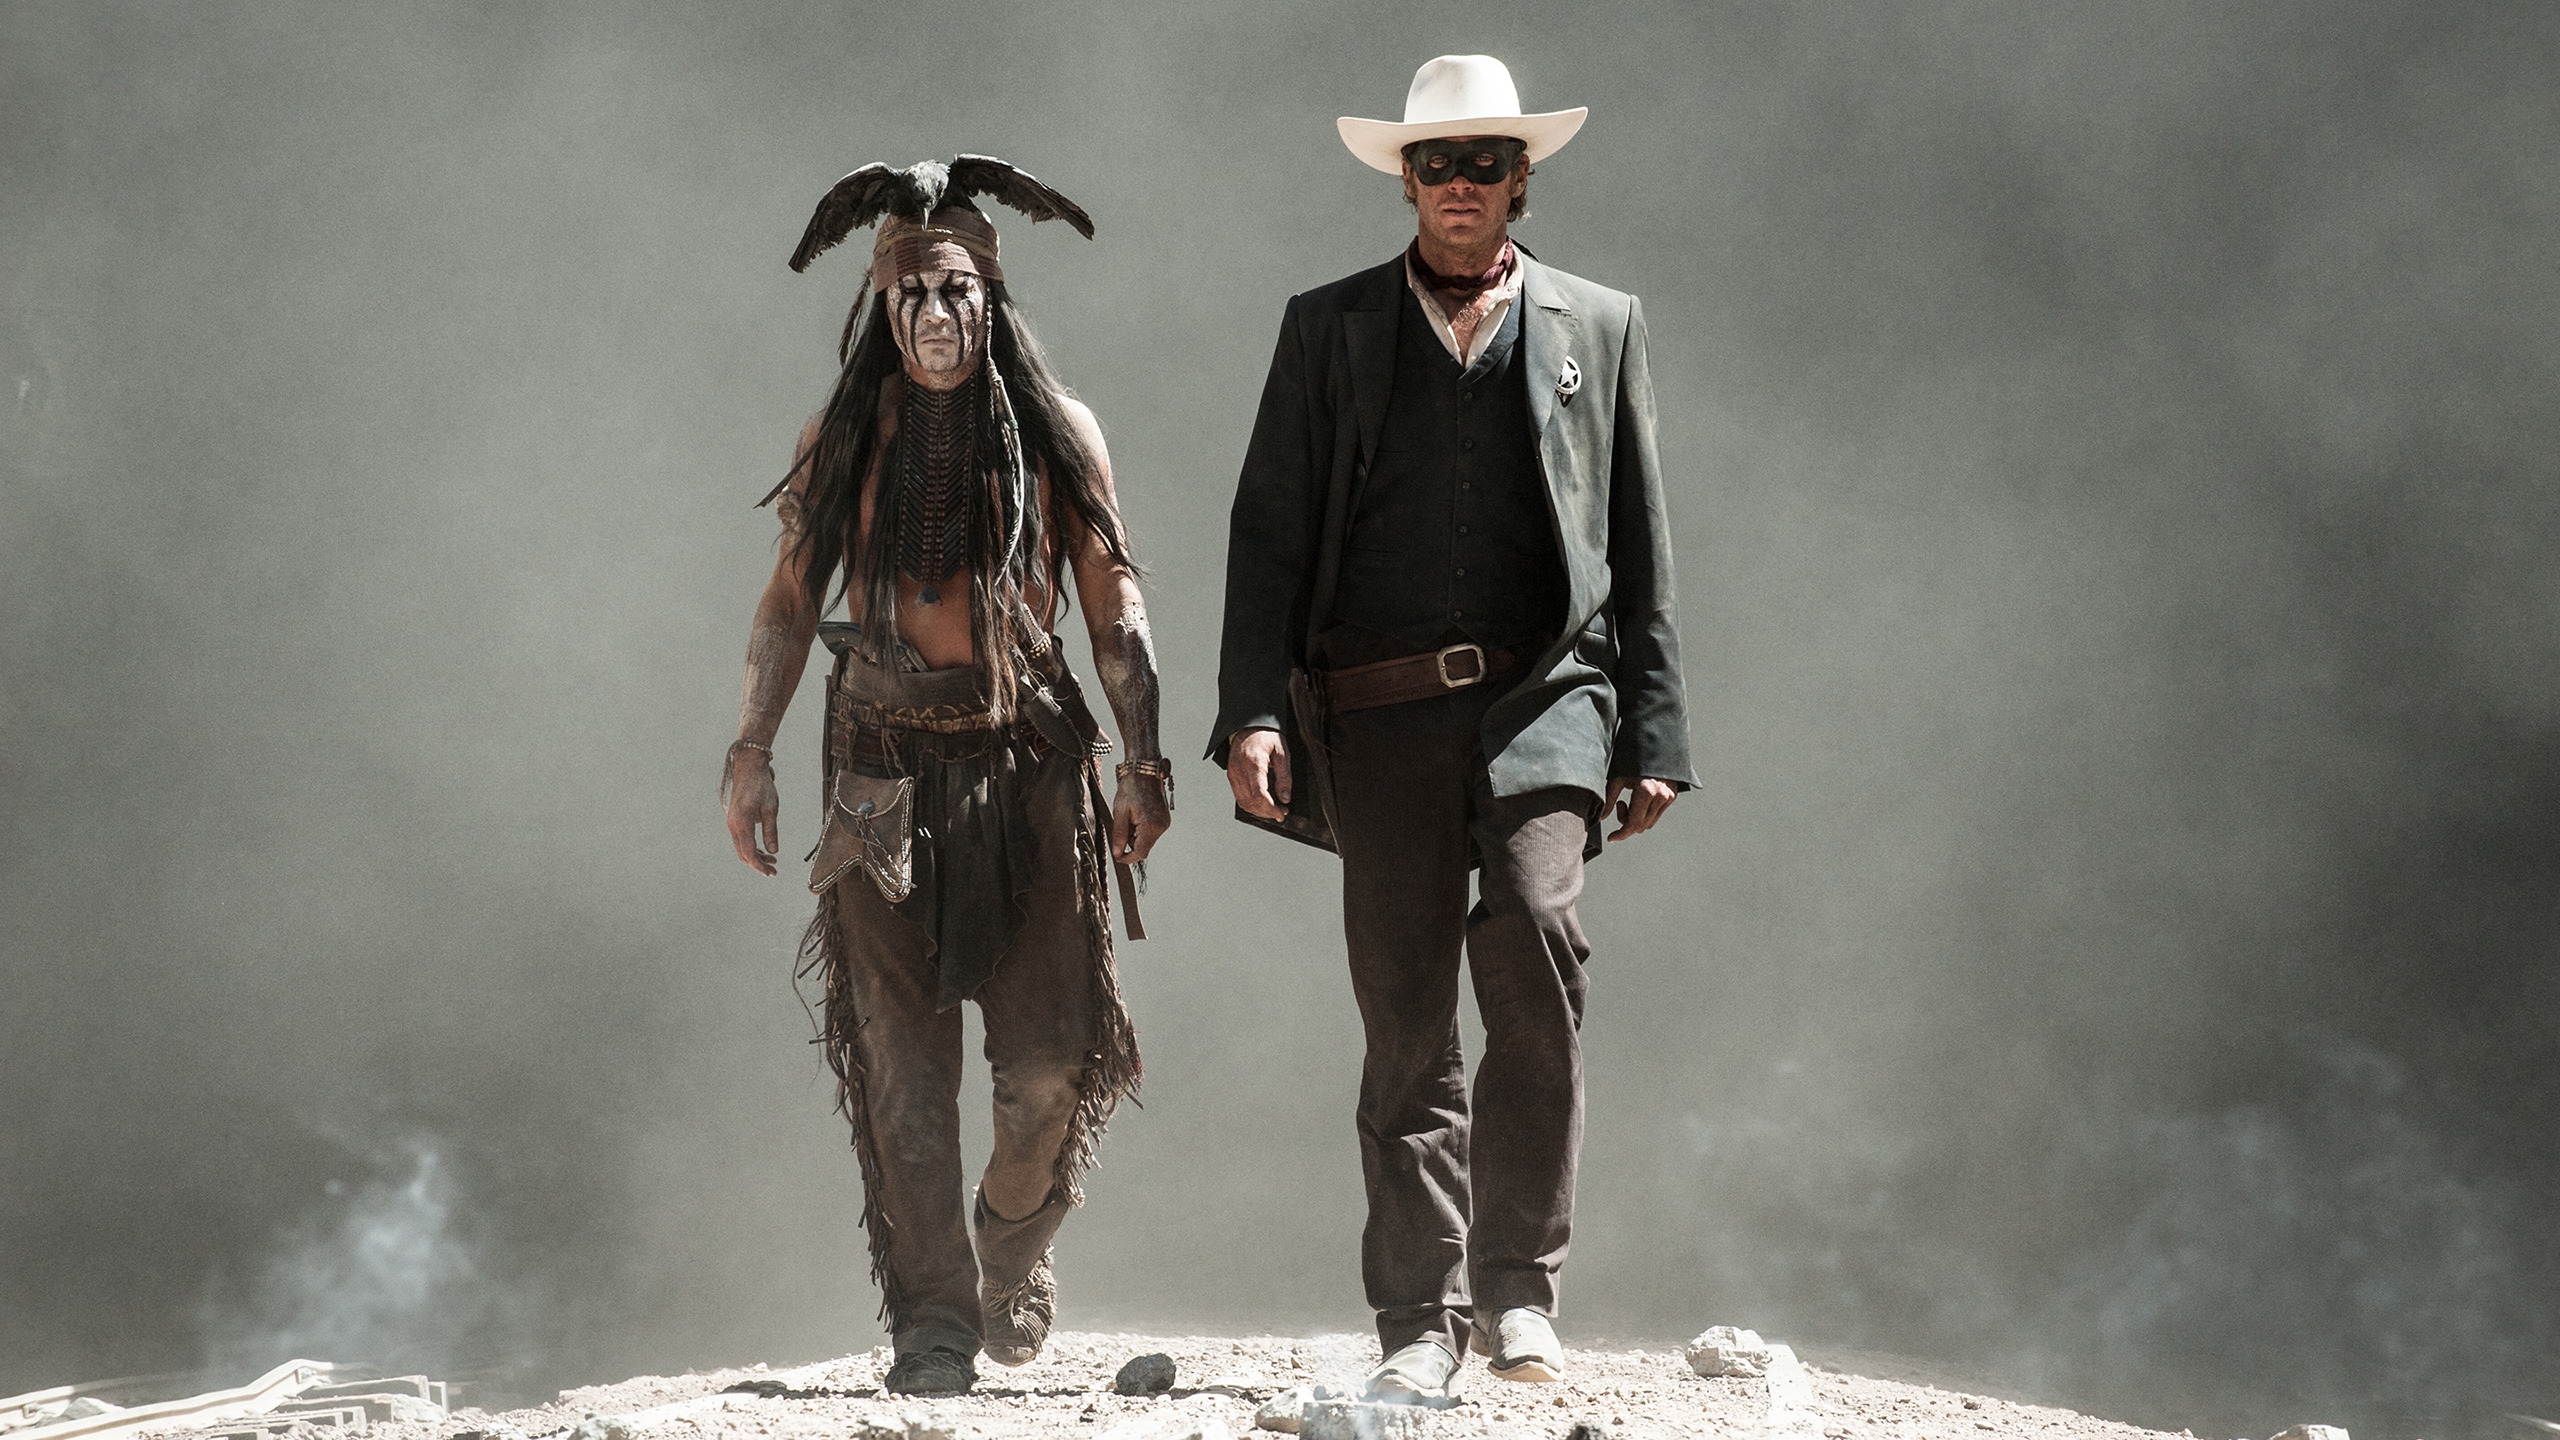 The Lone Ranger Movie for 2560x1440 HDTV resolution